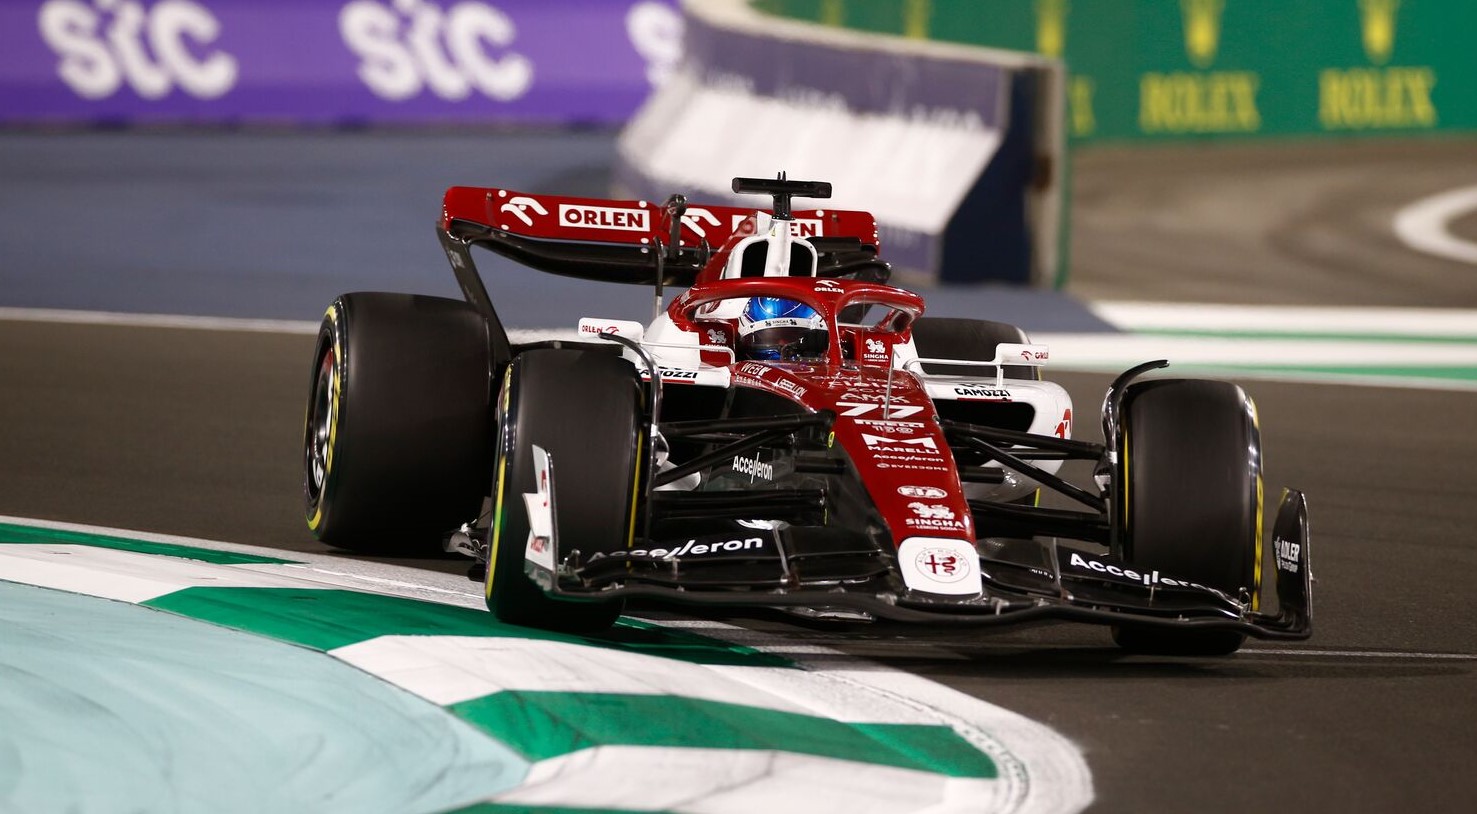 Valtteri Bottas retired from Saudi Arabian GP race to save the engine